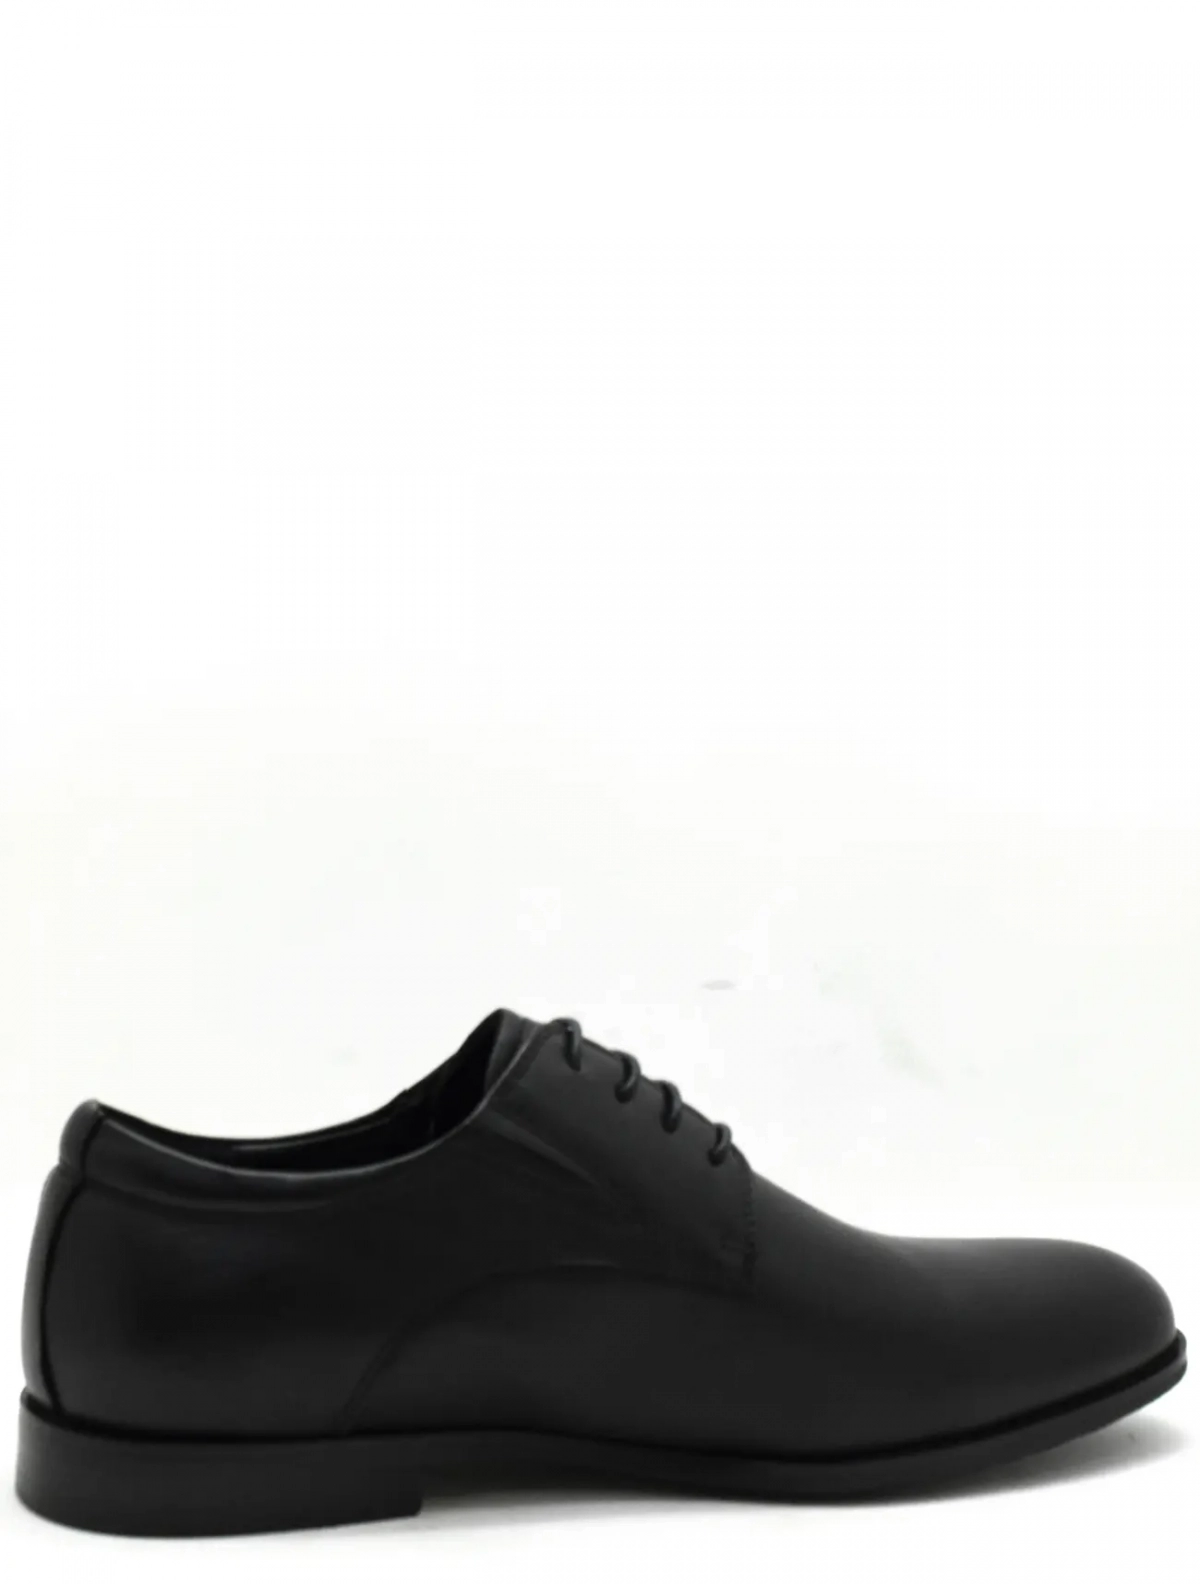 Roscote K0609-748-T3387 мужские туфли